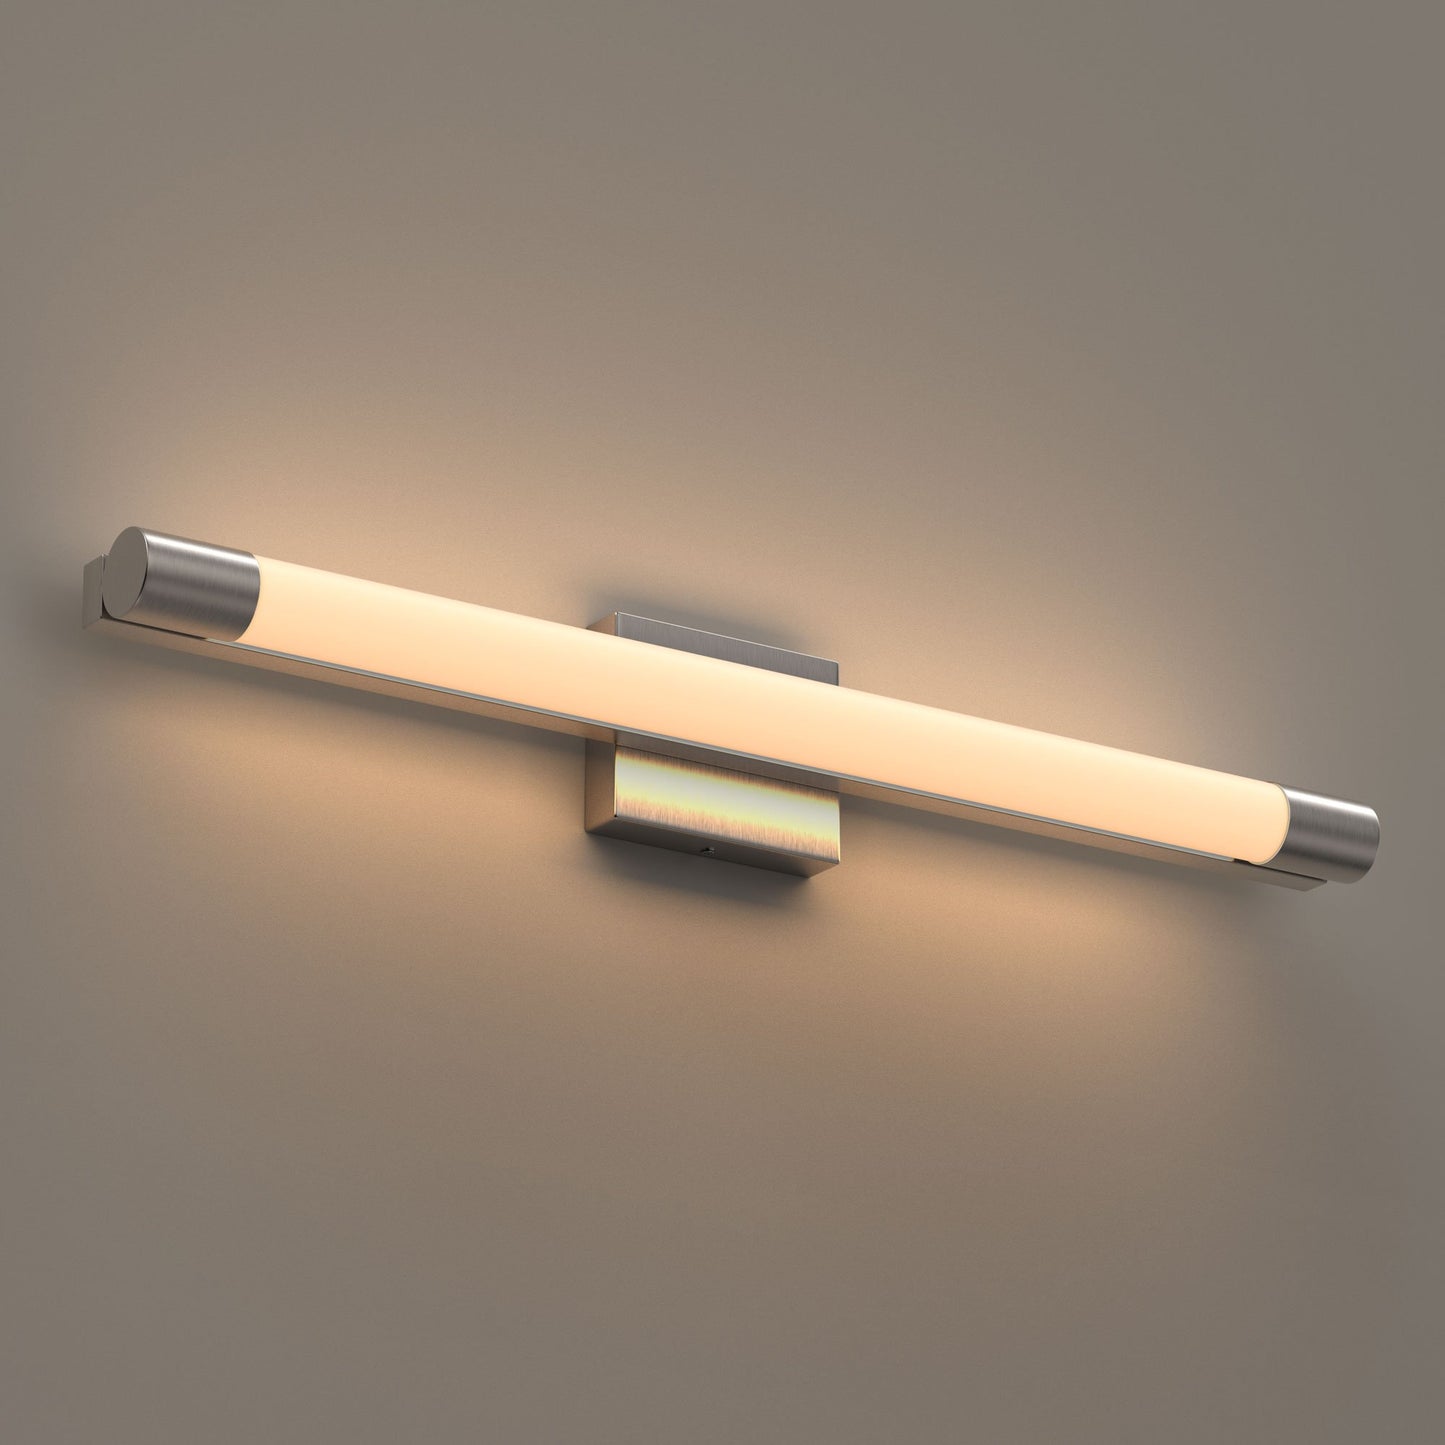 Cylinder Shape Integrated LED Bath Bar Light, 18.5 Inch/27.5 Inch, 4000K (Cool White), Dimmable, ETL Listed, Bathroom Vanity Lighting